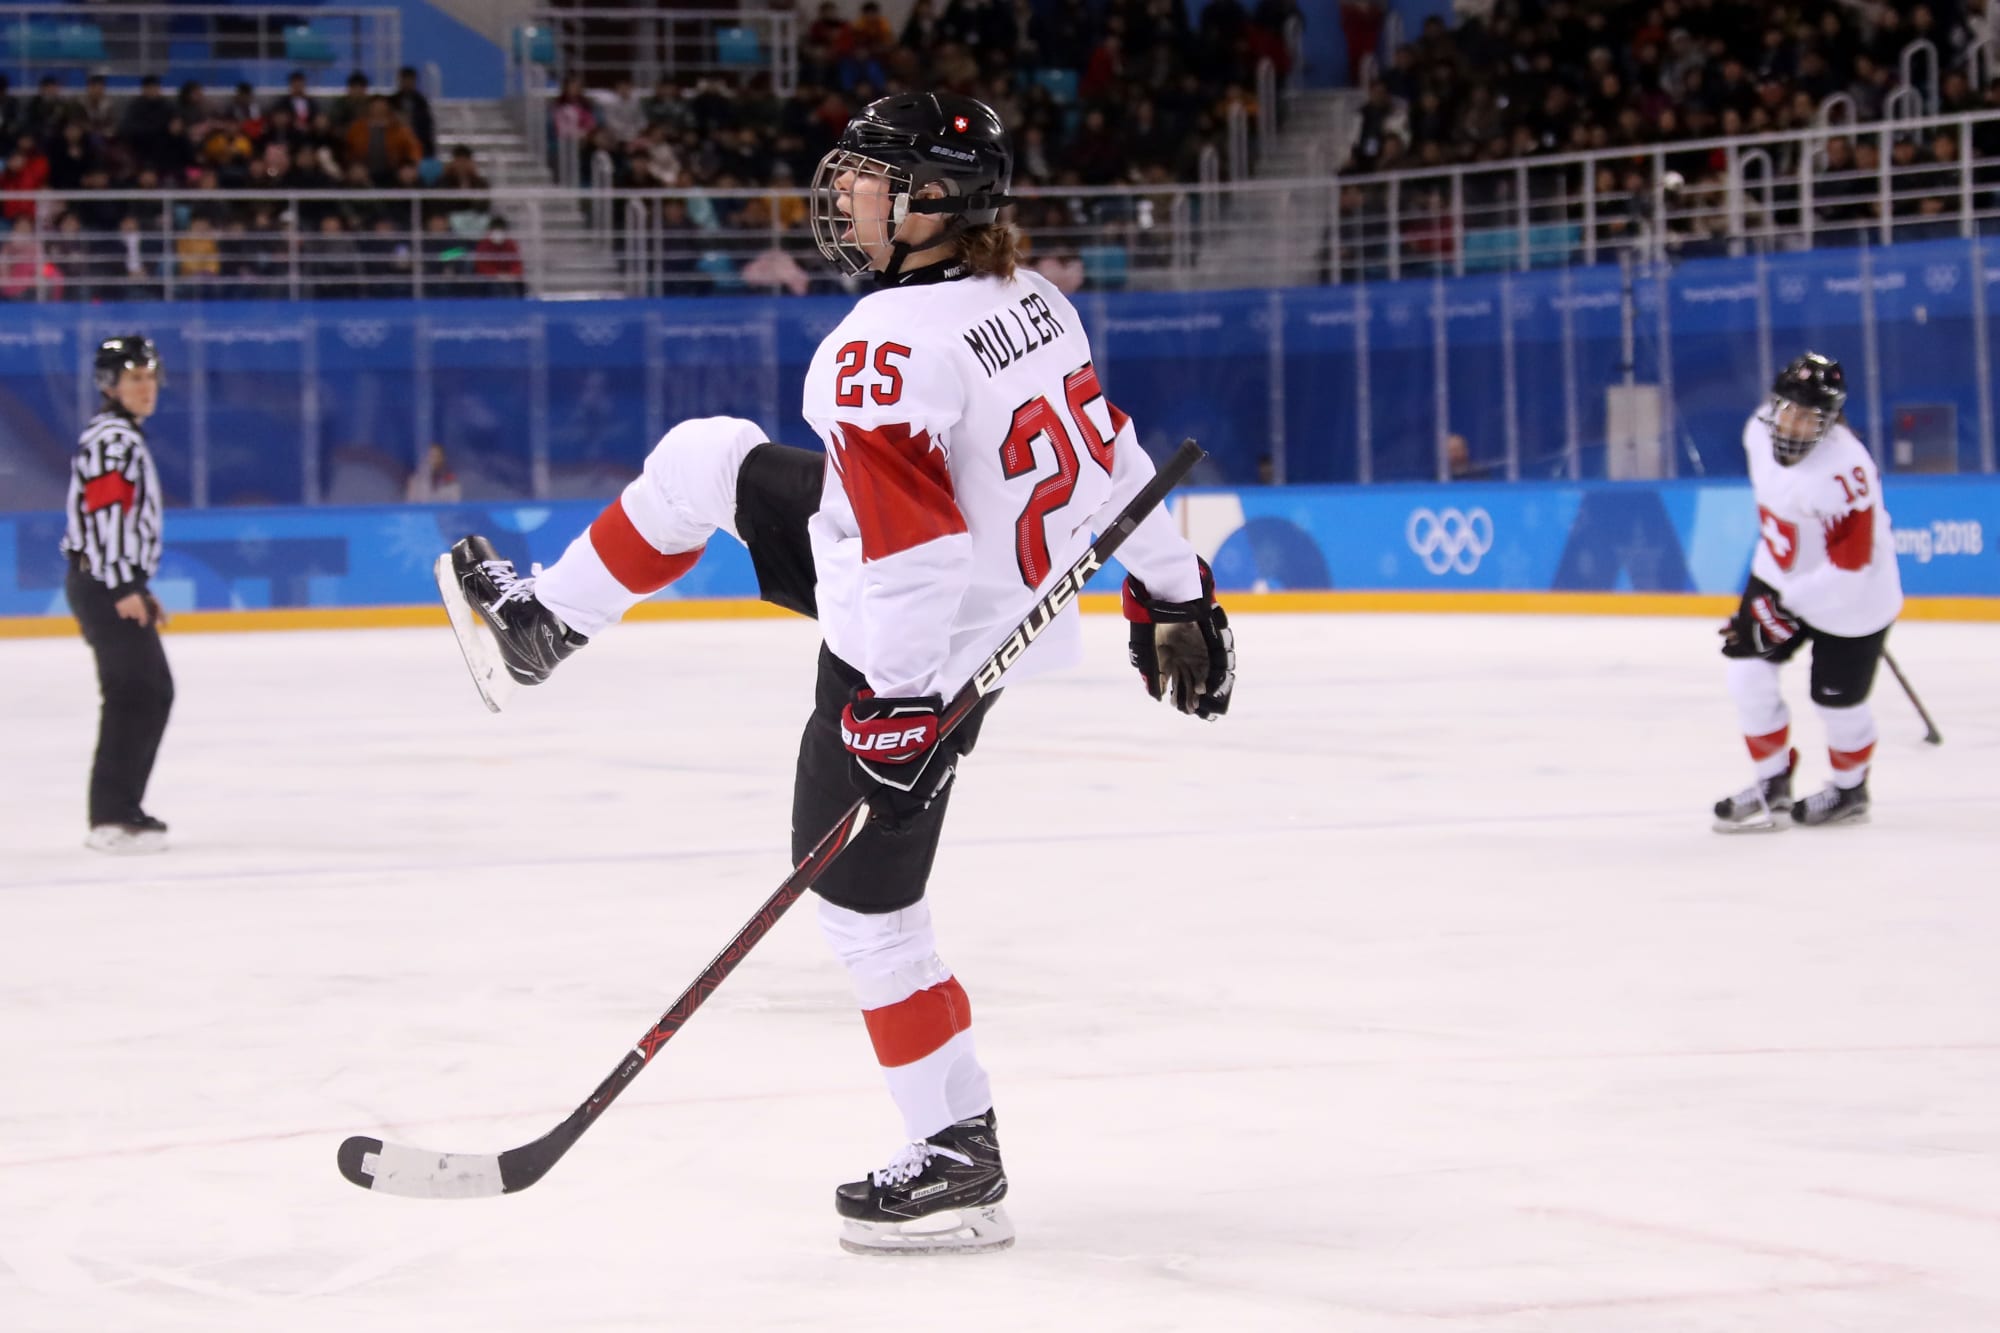 Meet the newest women's hockey star, Alina Muller